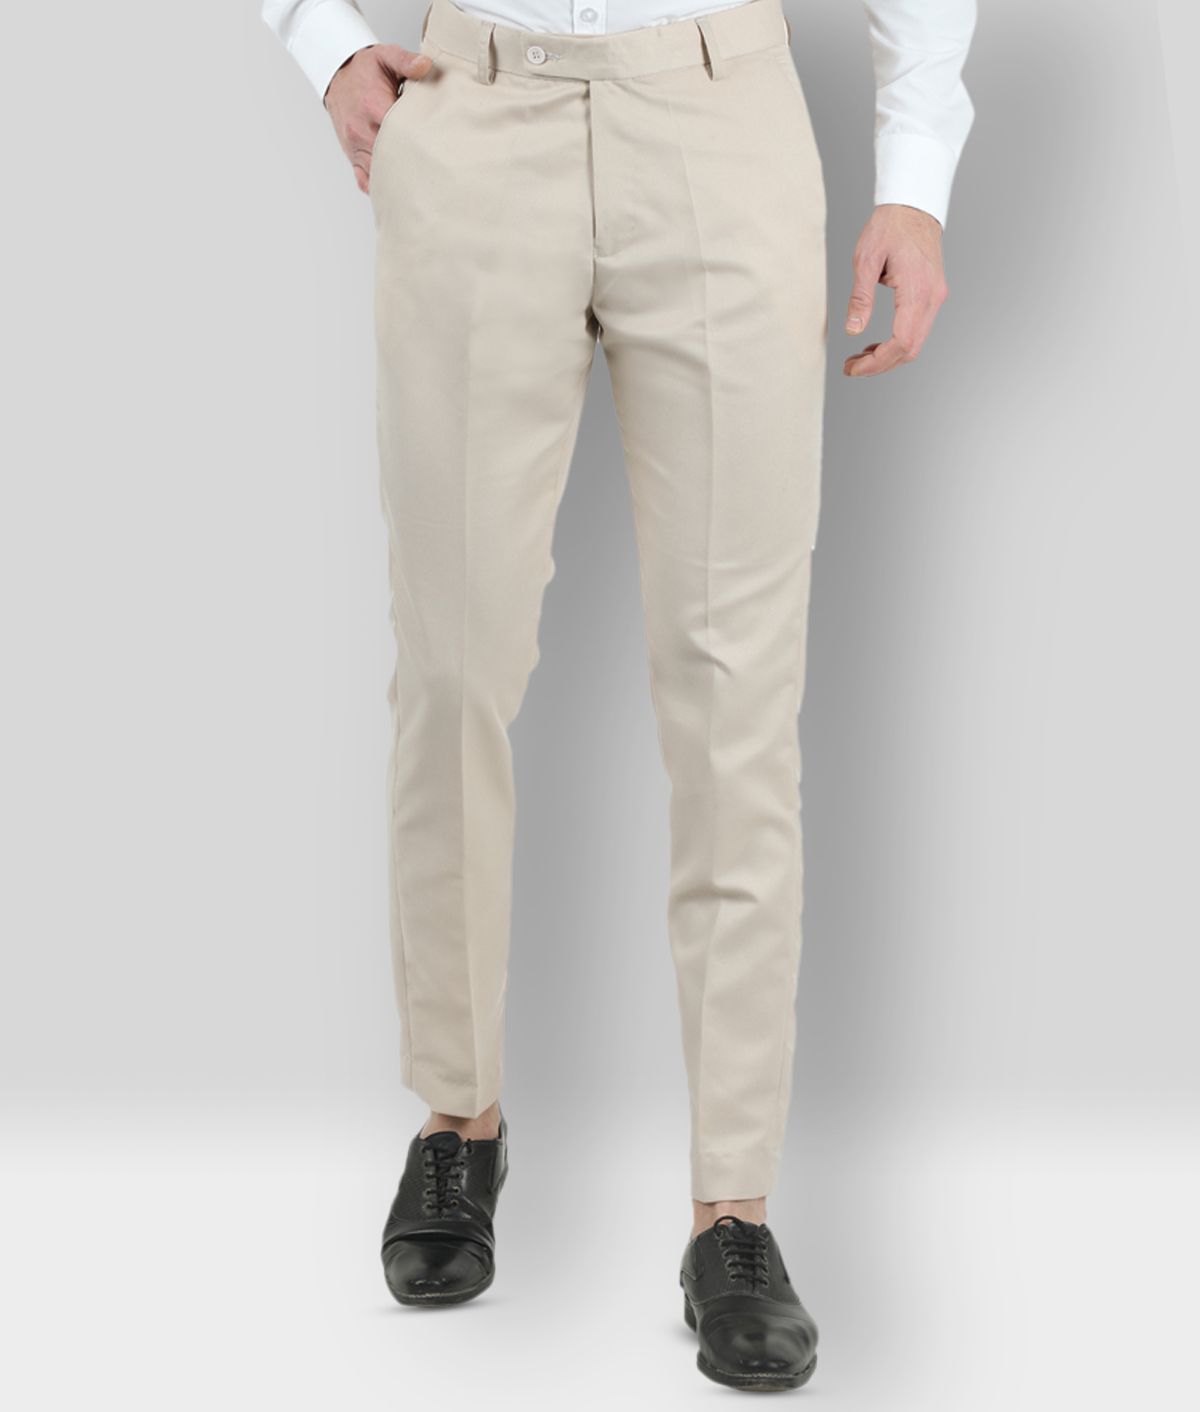     			VEI SASTRE - Cream Cotton Blend Slim Fit Men's Formal Pants (Pack of 1)